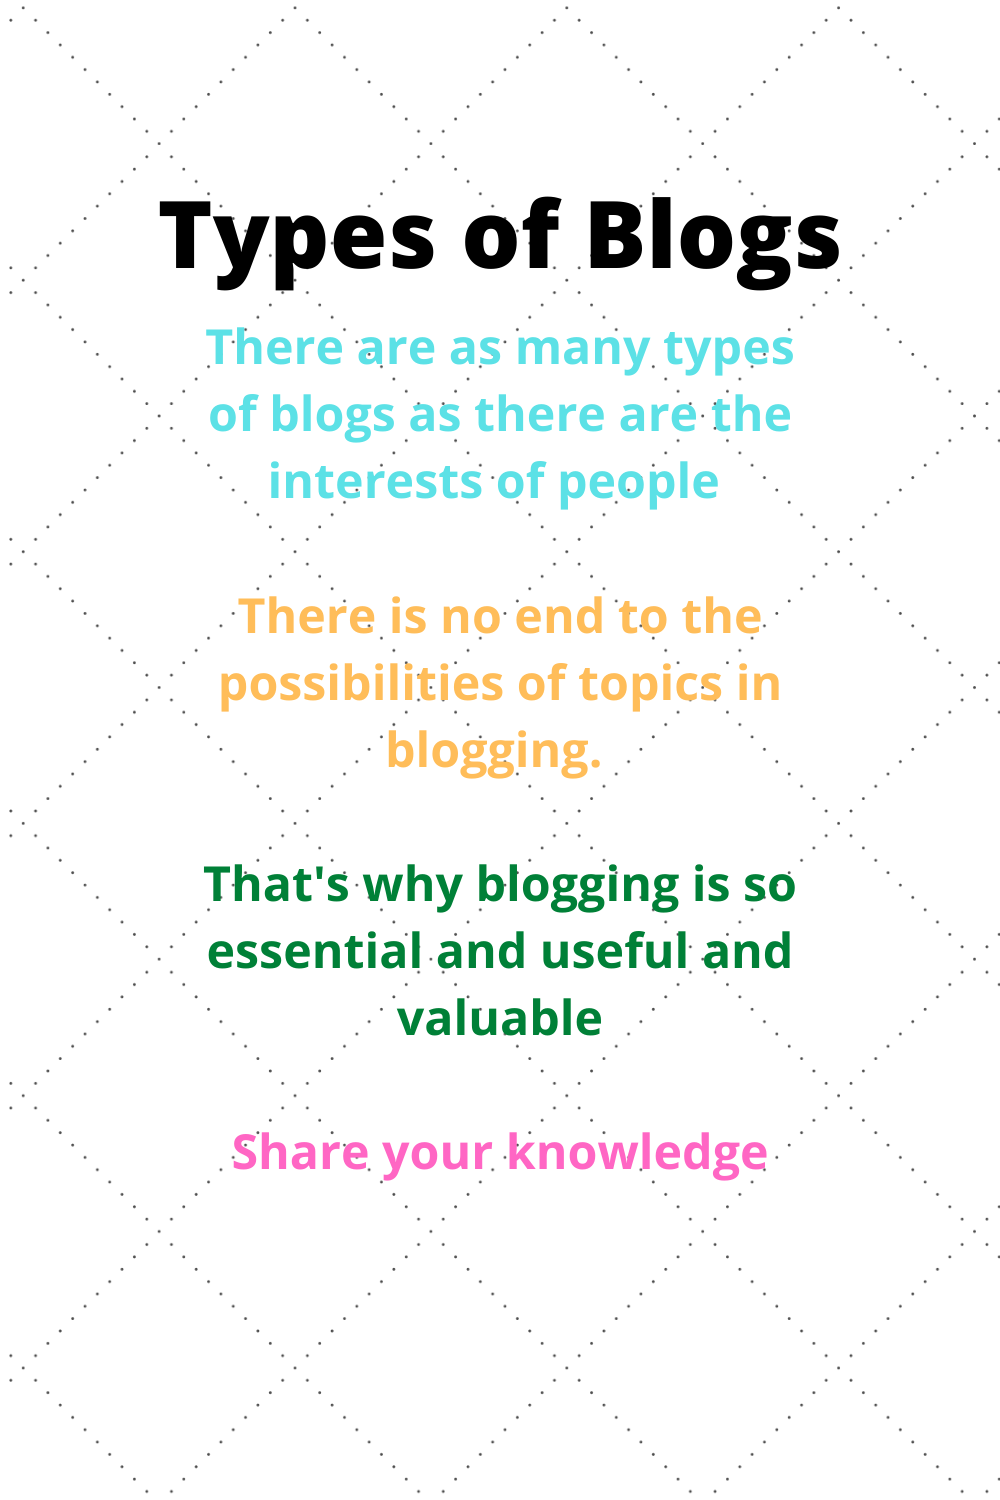 Outstanding Tips for Monetizing Your Blog